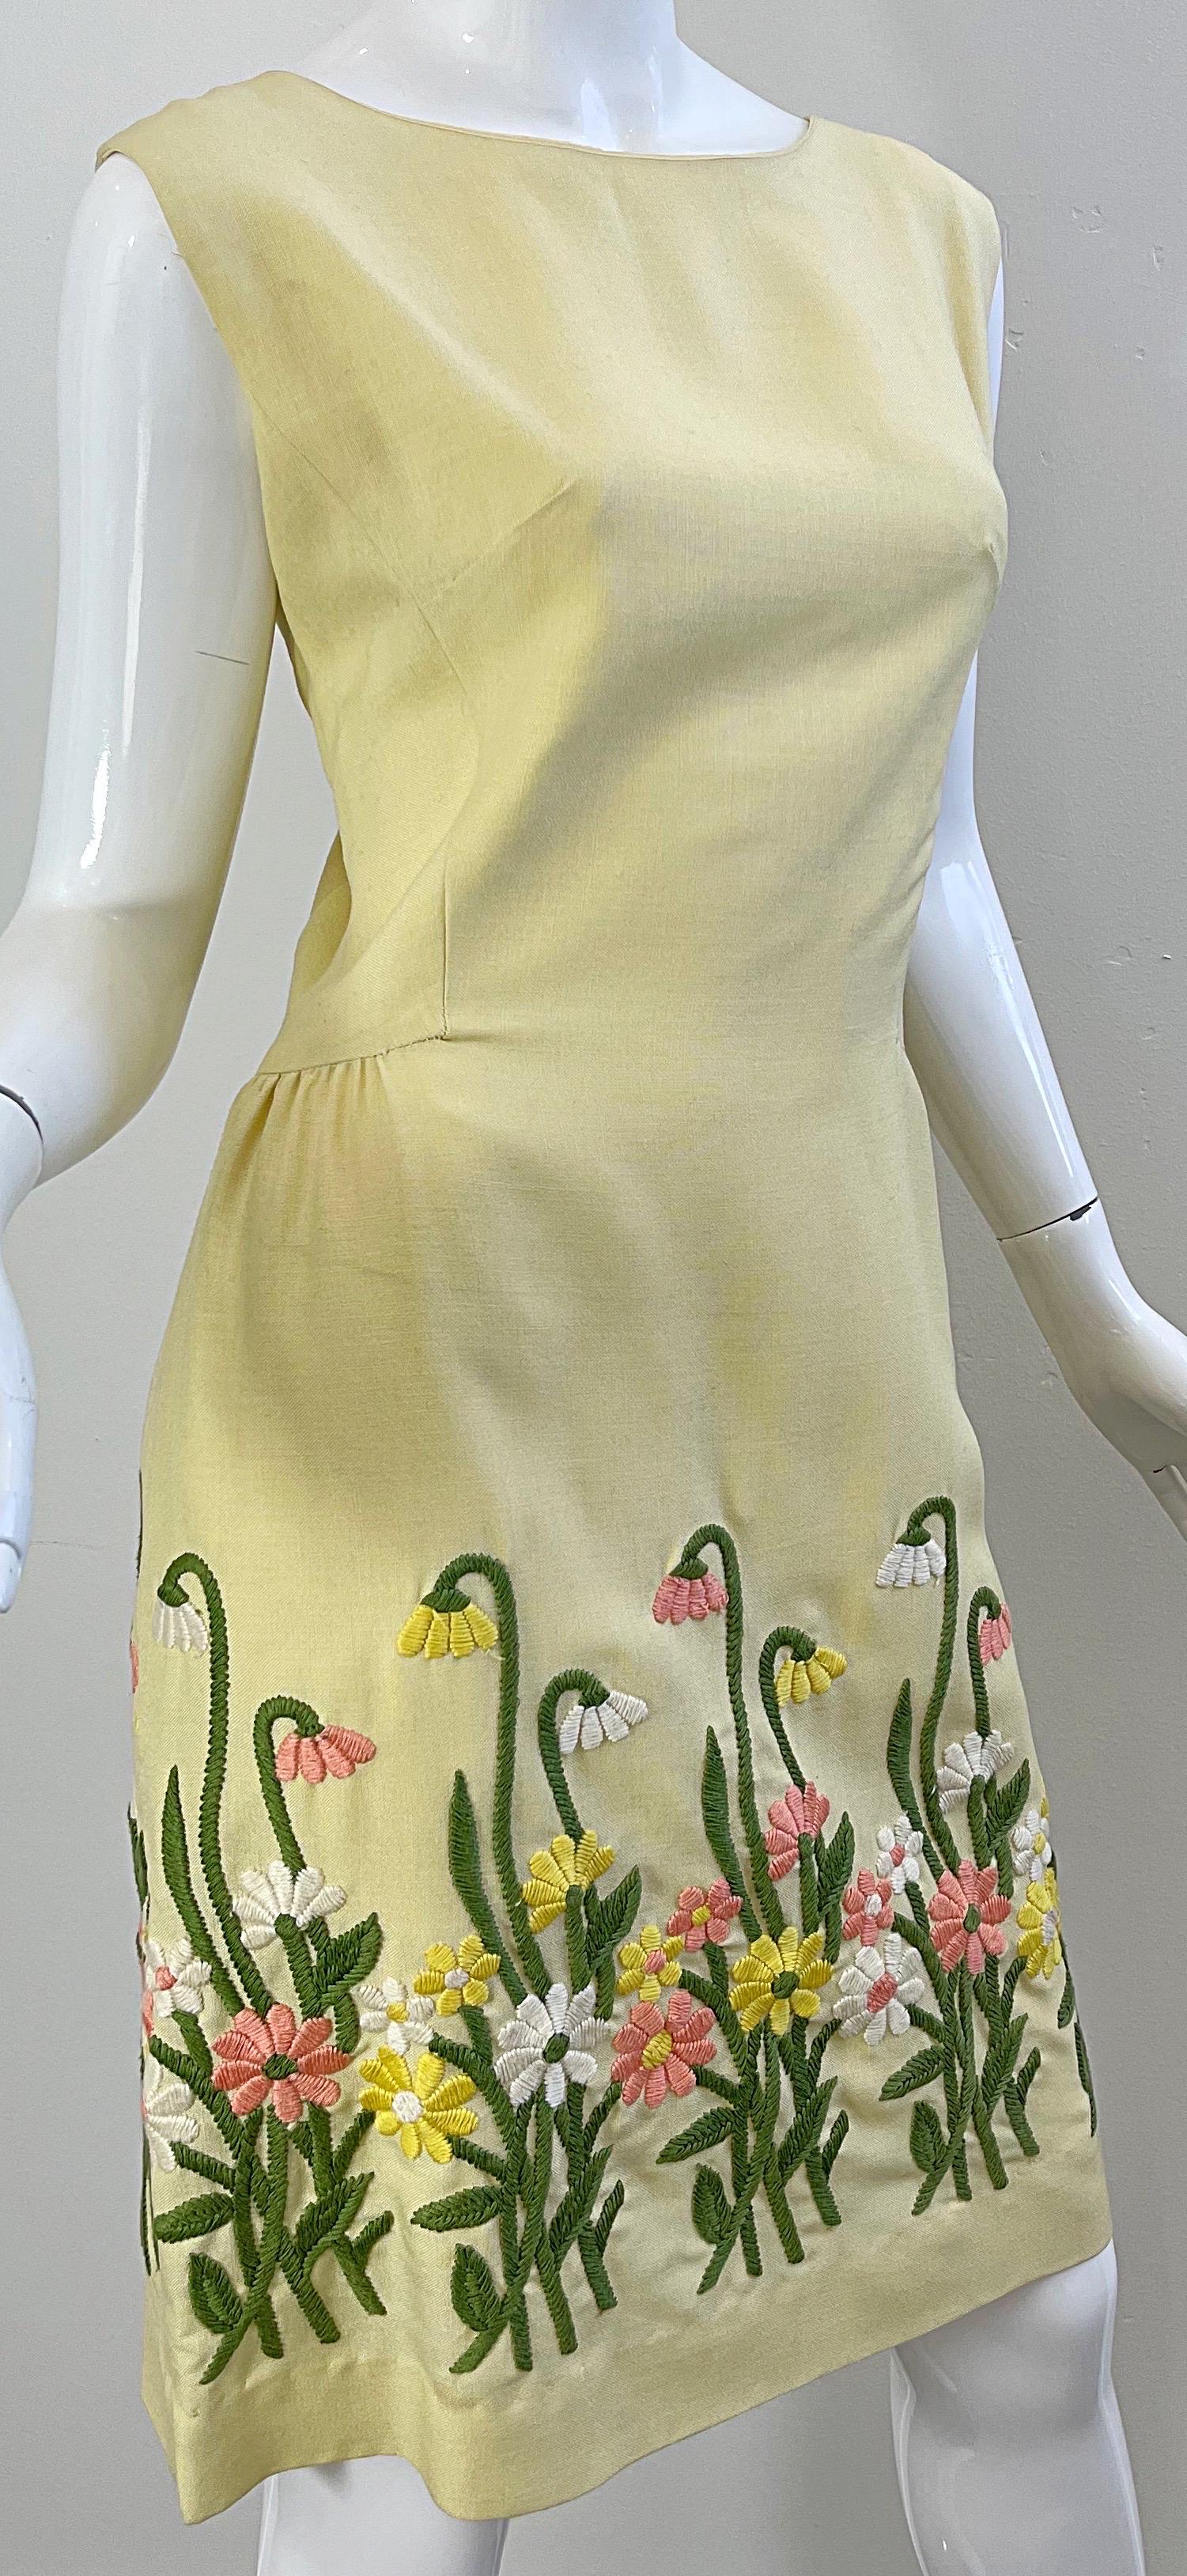 1960s yellow dress